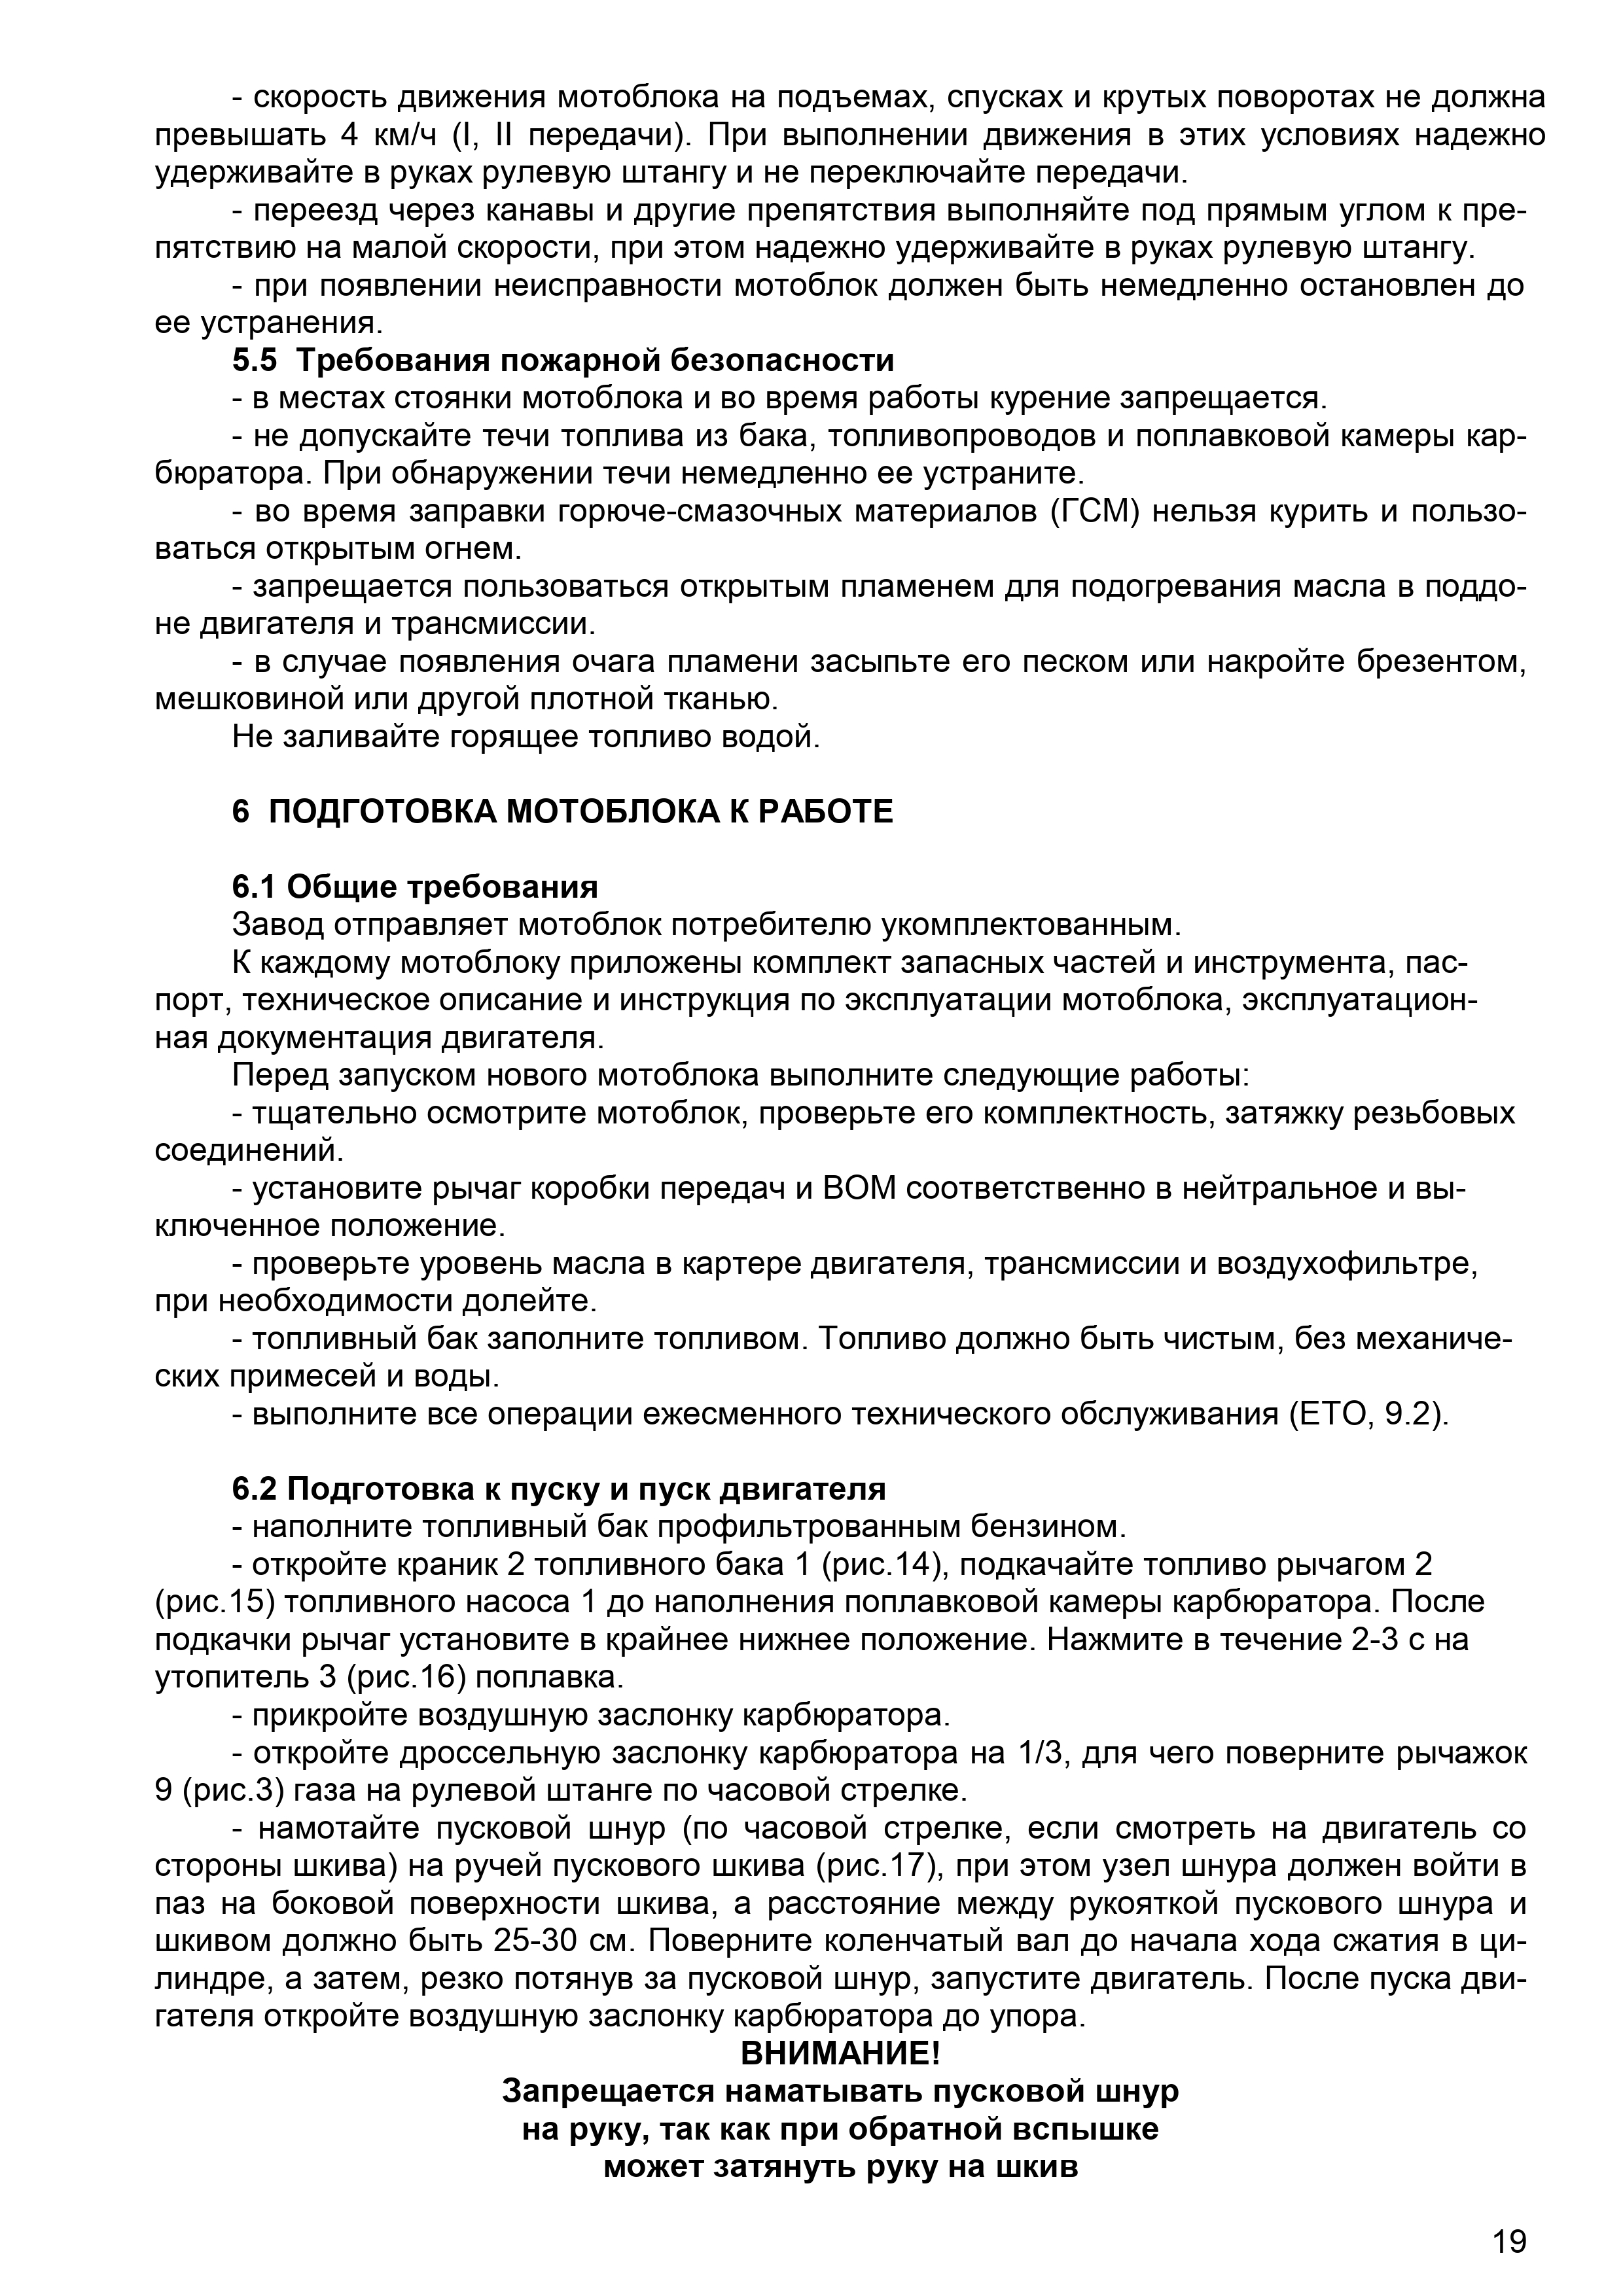 belarus_09h_manual i catalog (1)_page-0019